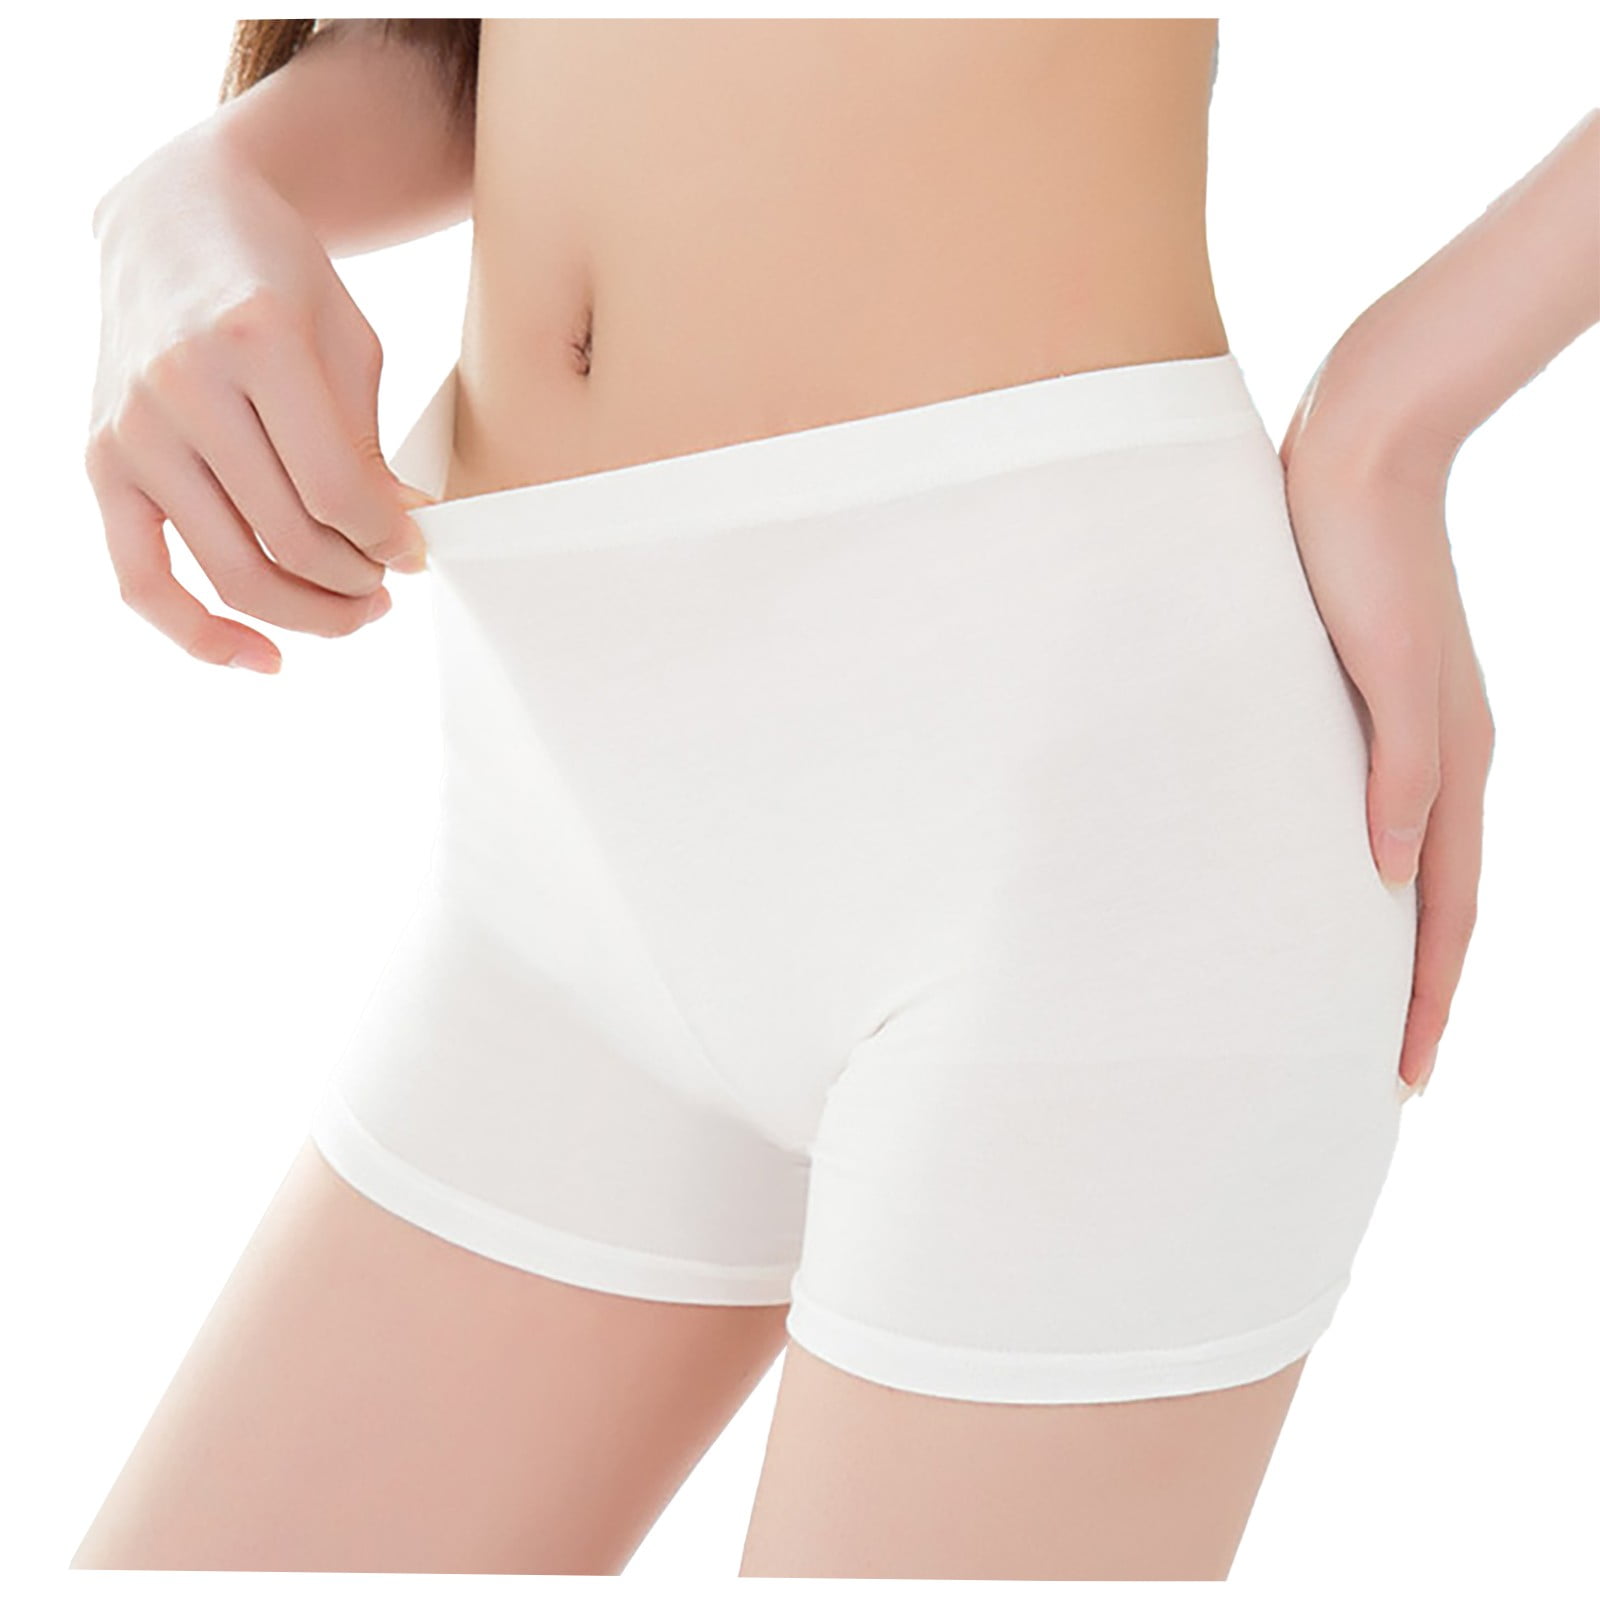 Safety Pants Short Underwear Women Big Size Lace Safety Shorts Leggins Briefs 